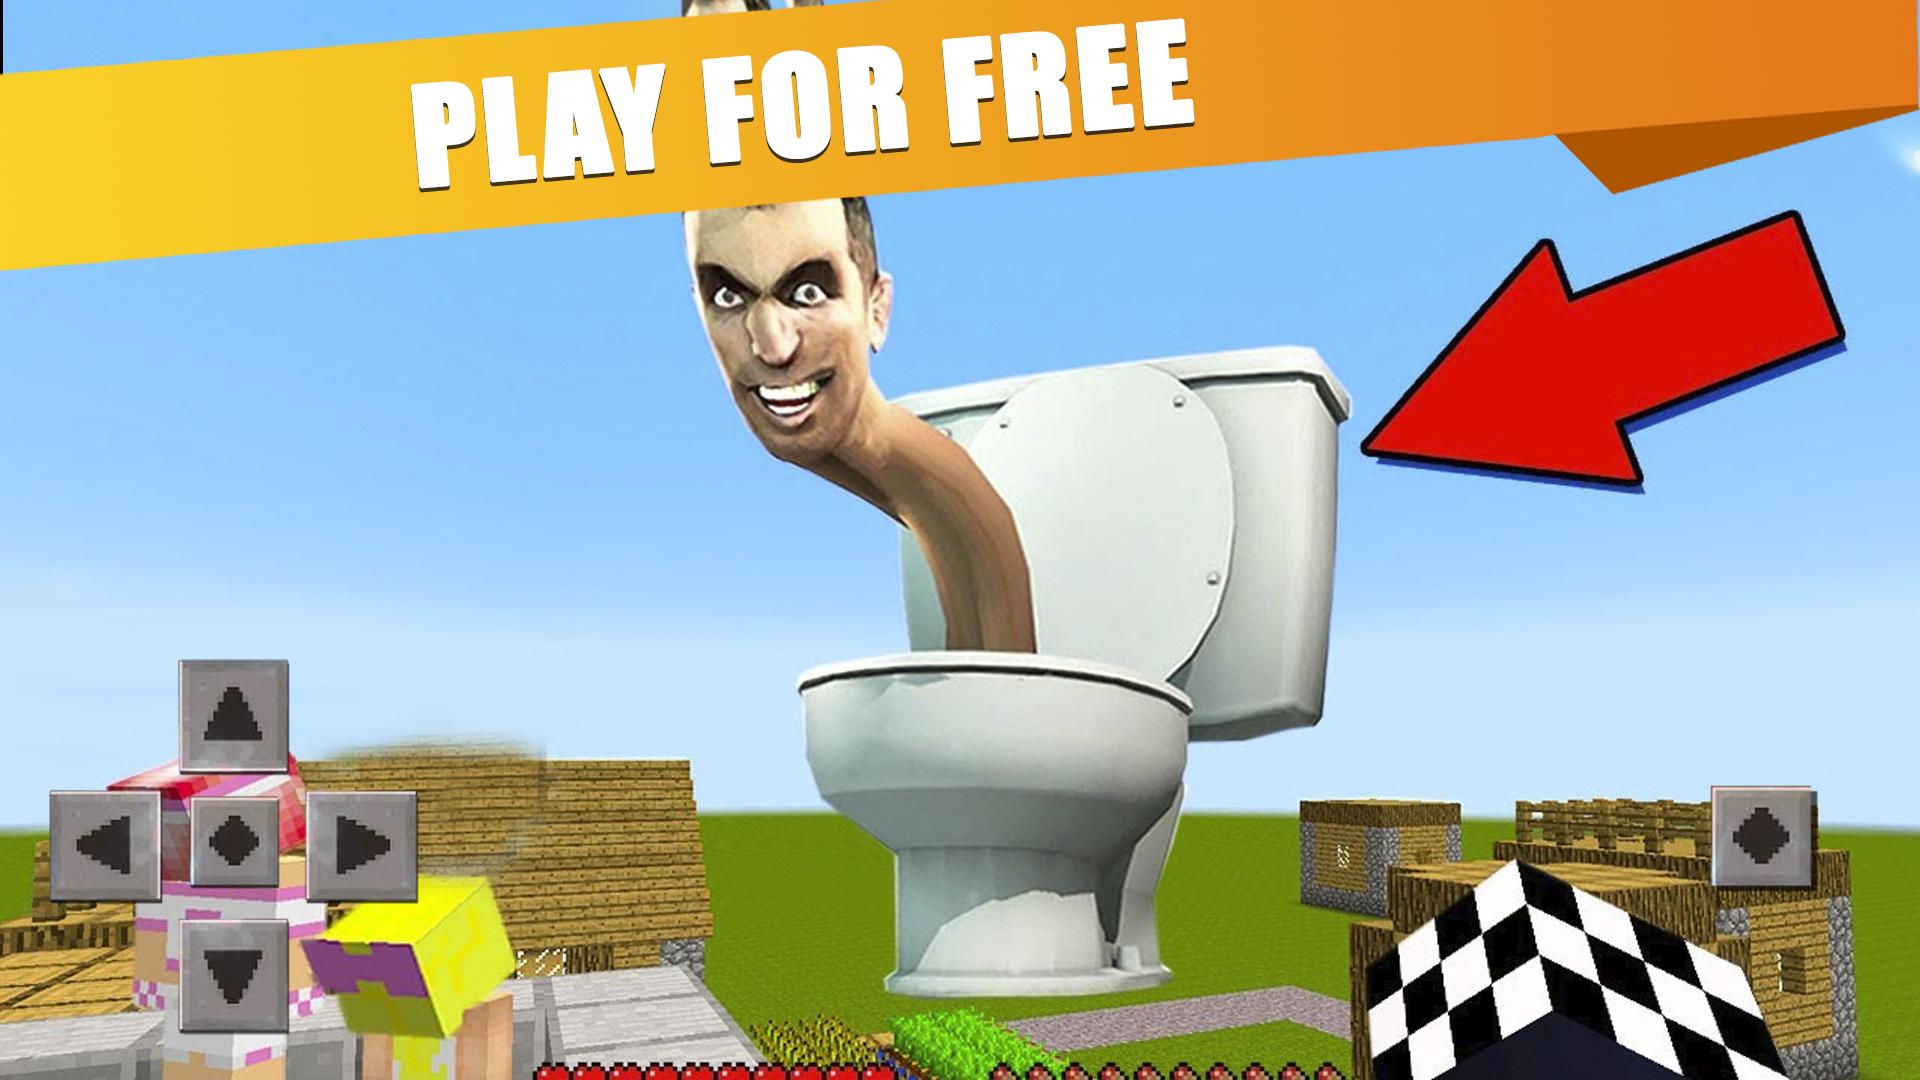 Skibidi Online - Free Play & No Download